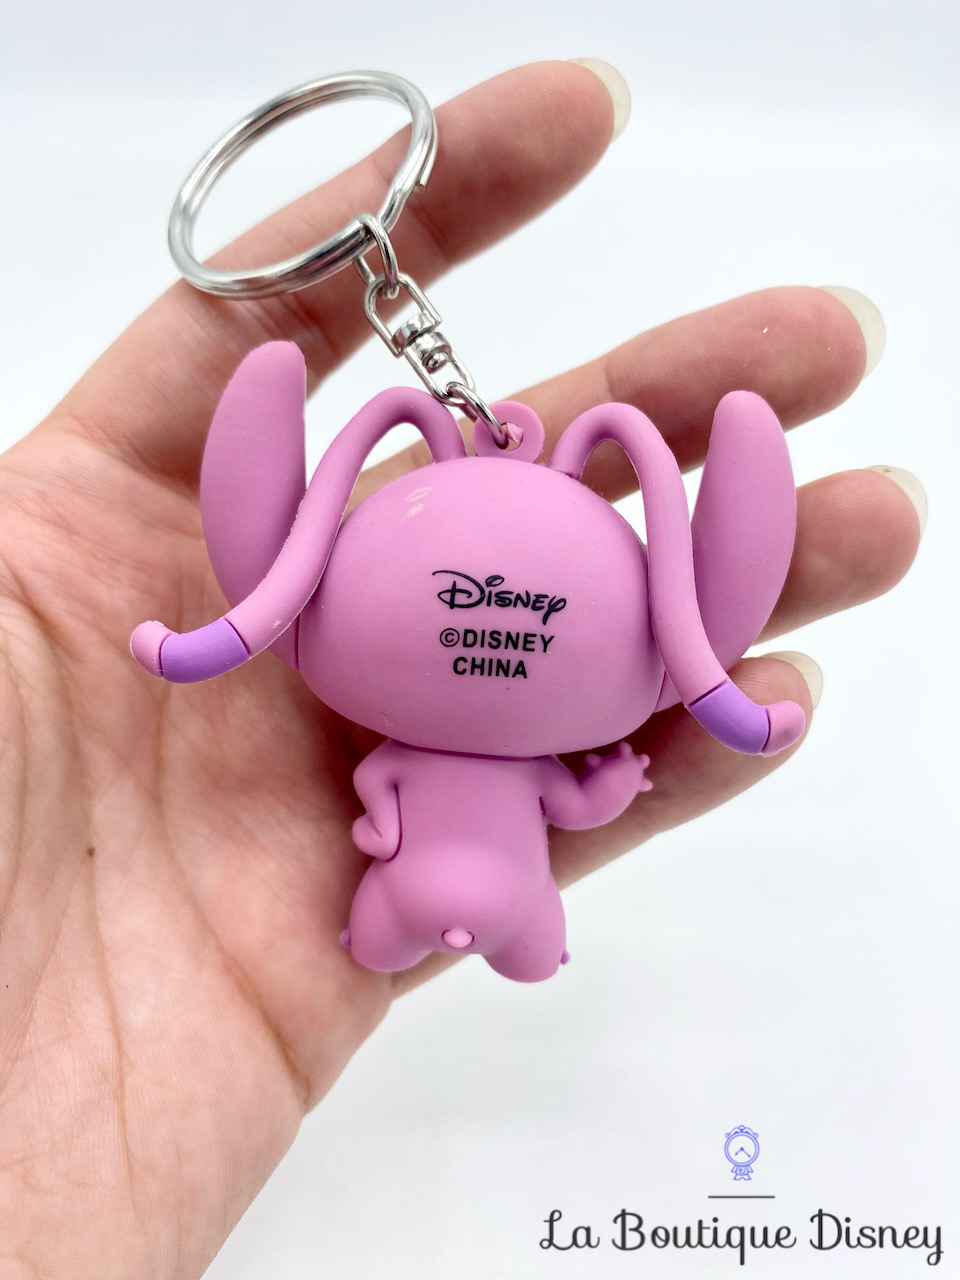 Porte-clés peluche Stitch Rose - Angel (Disney) - 11 cm